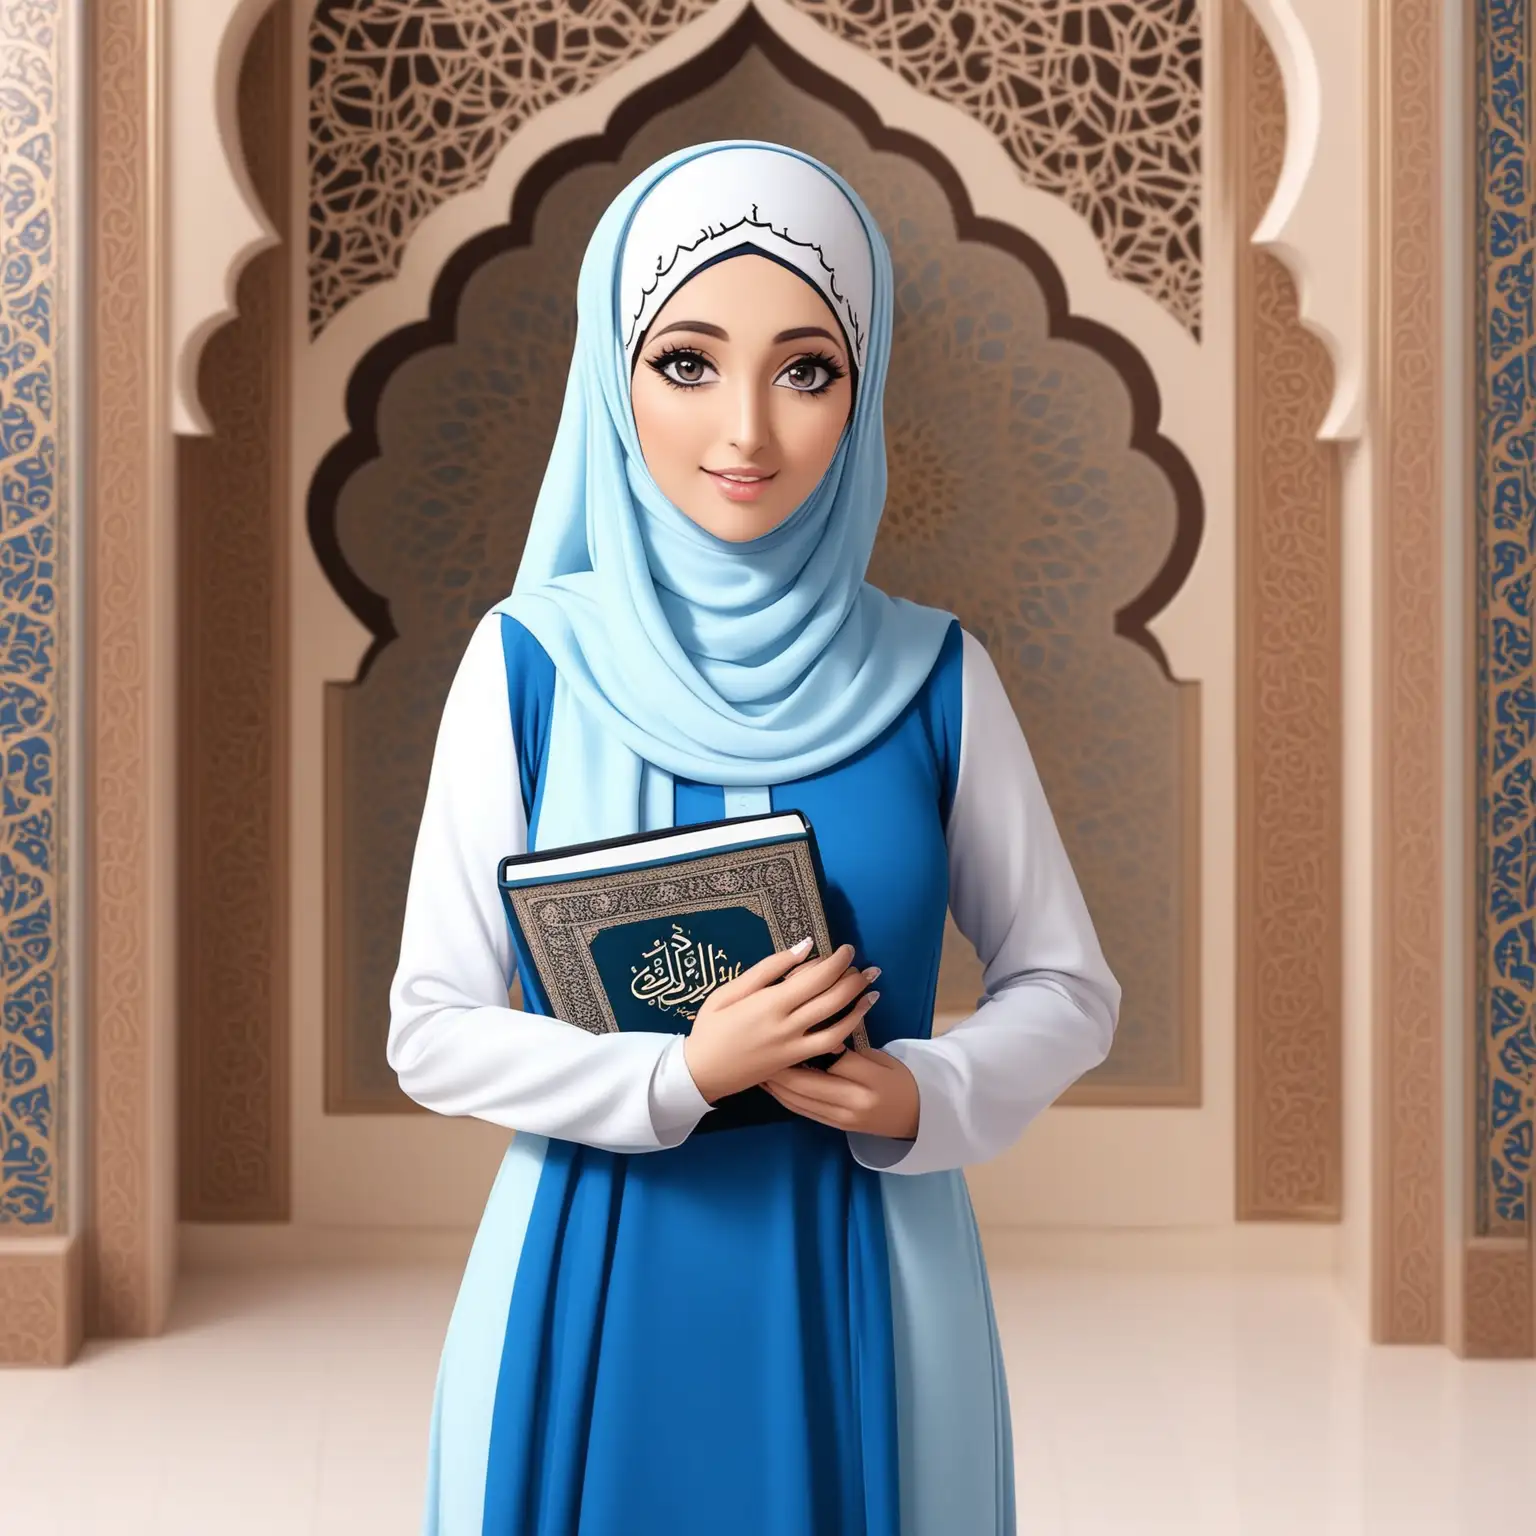 Female Quran Teacher in White and Blue Dress Teaching Islamic Studies